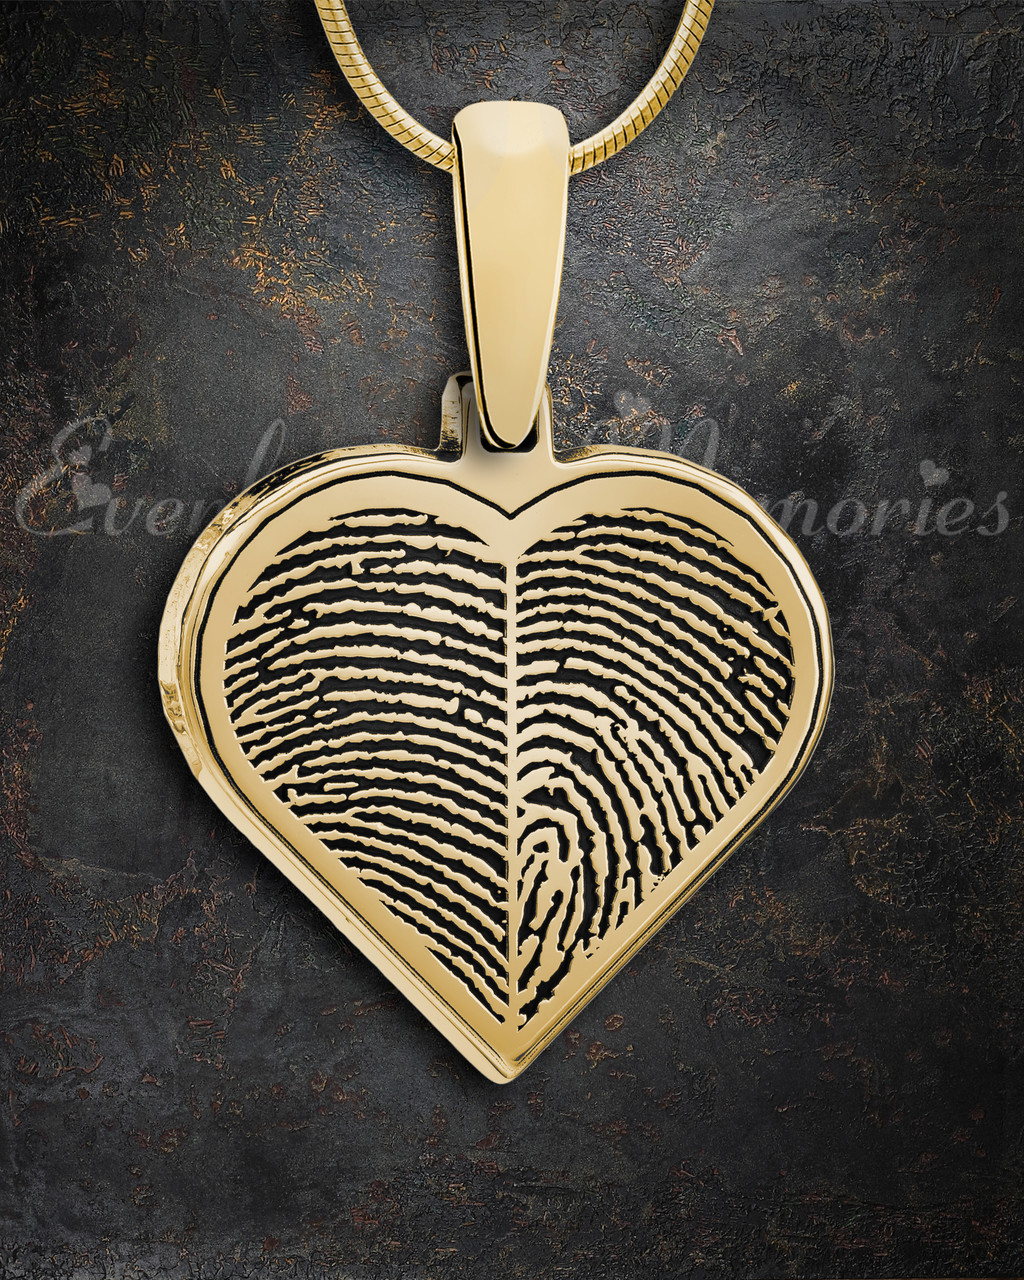 Gold Heart Shaped Locket Pendant